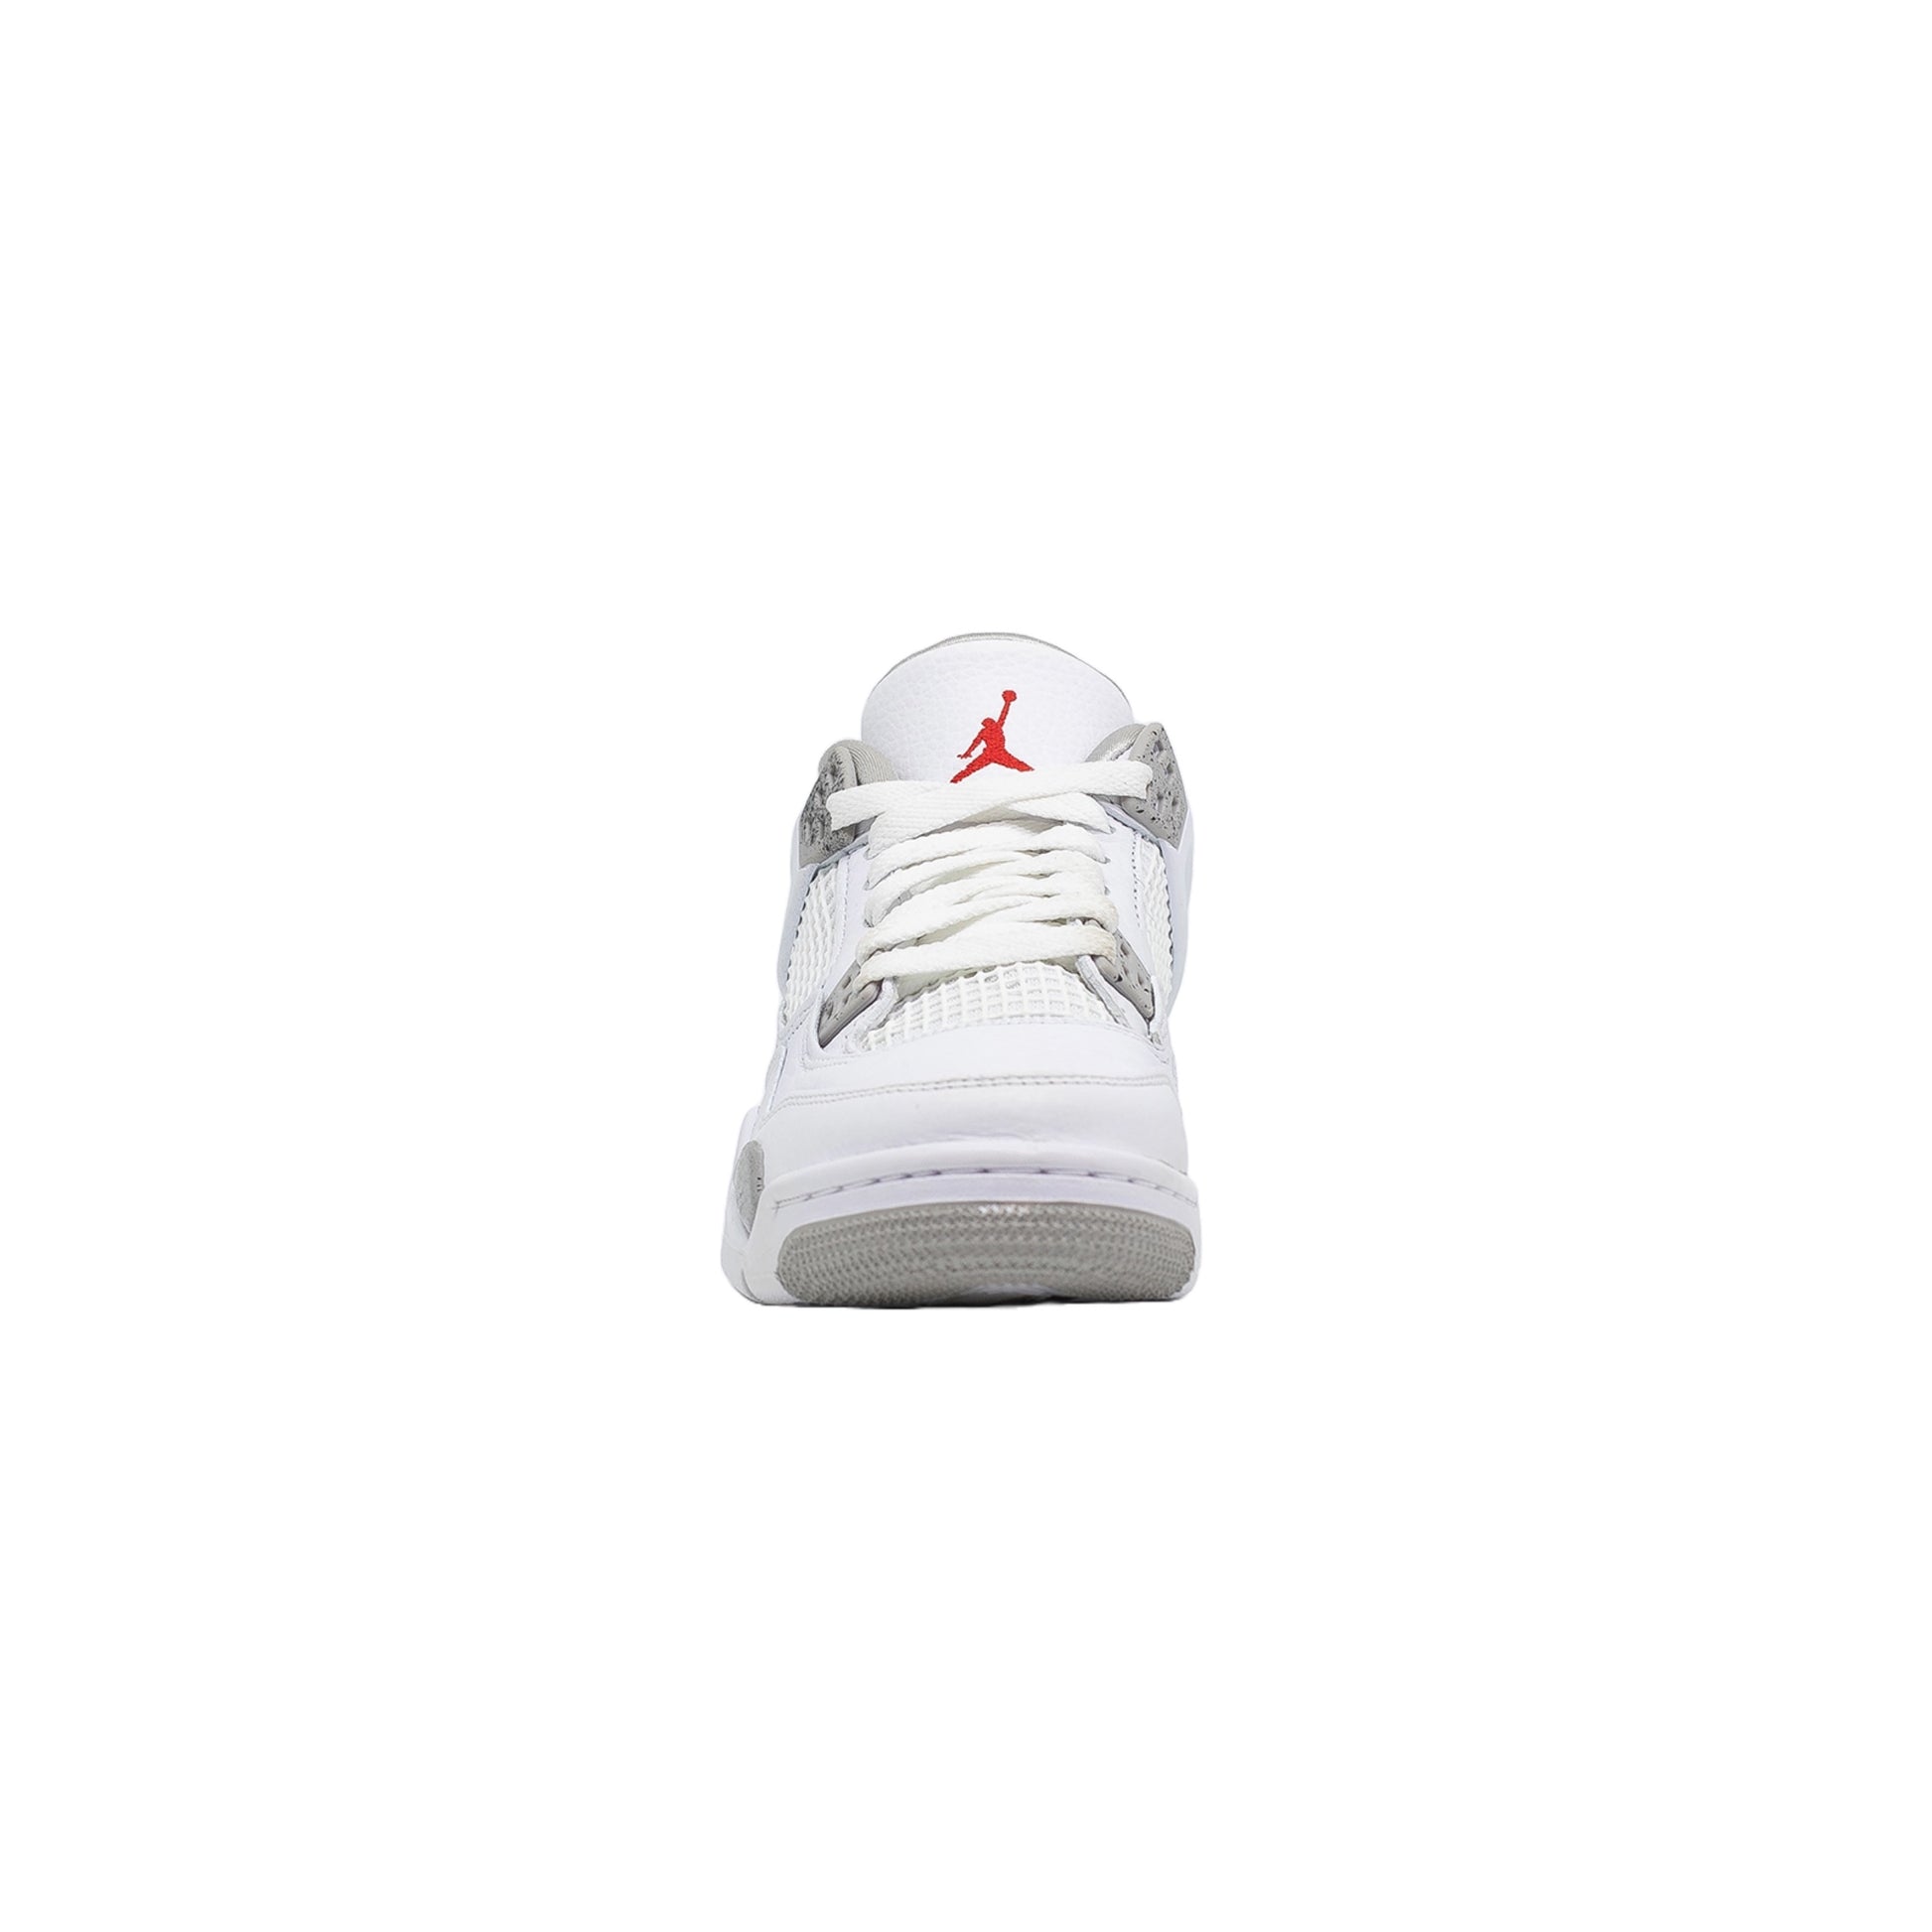 Air Jordan 4 Retro White Oreo - Tha Plug ZA